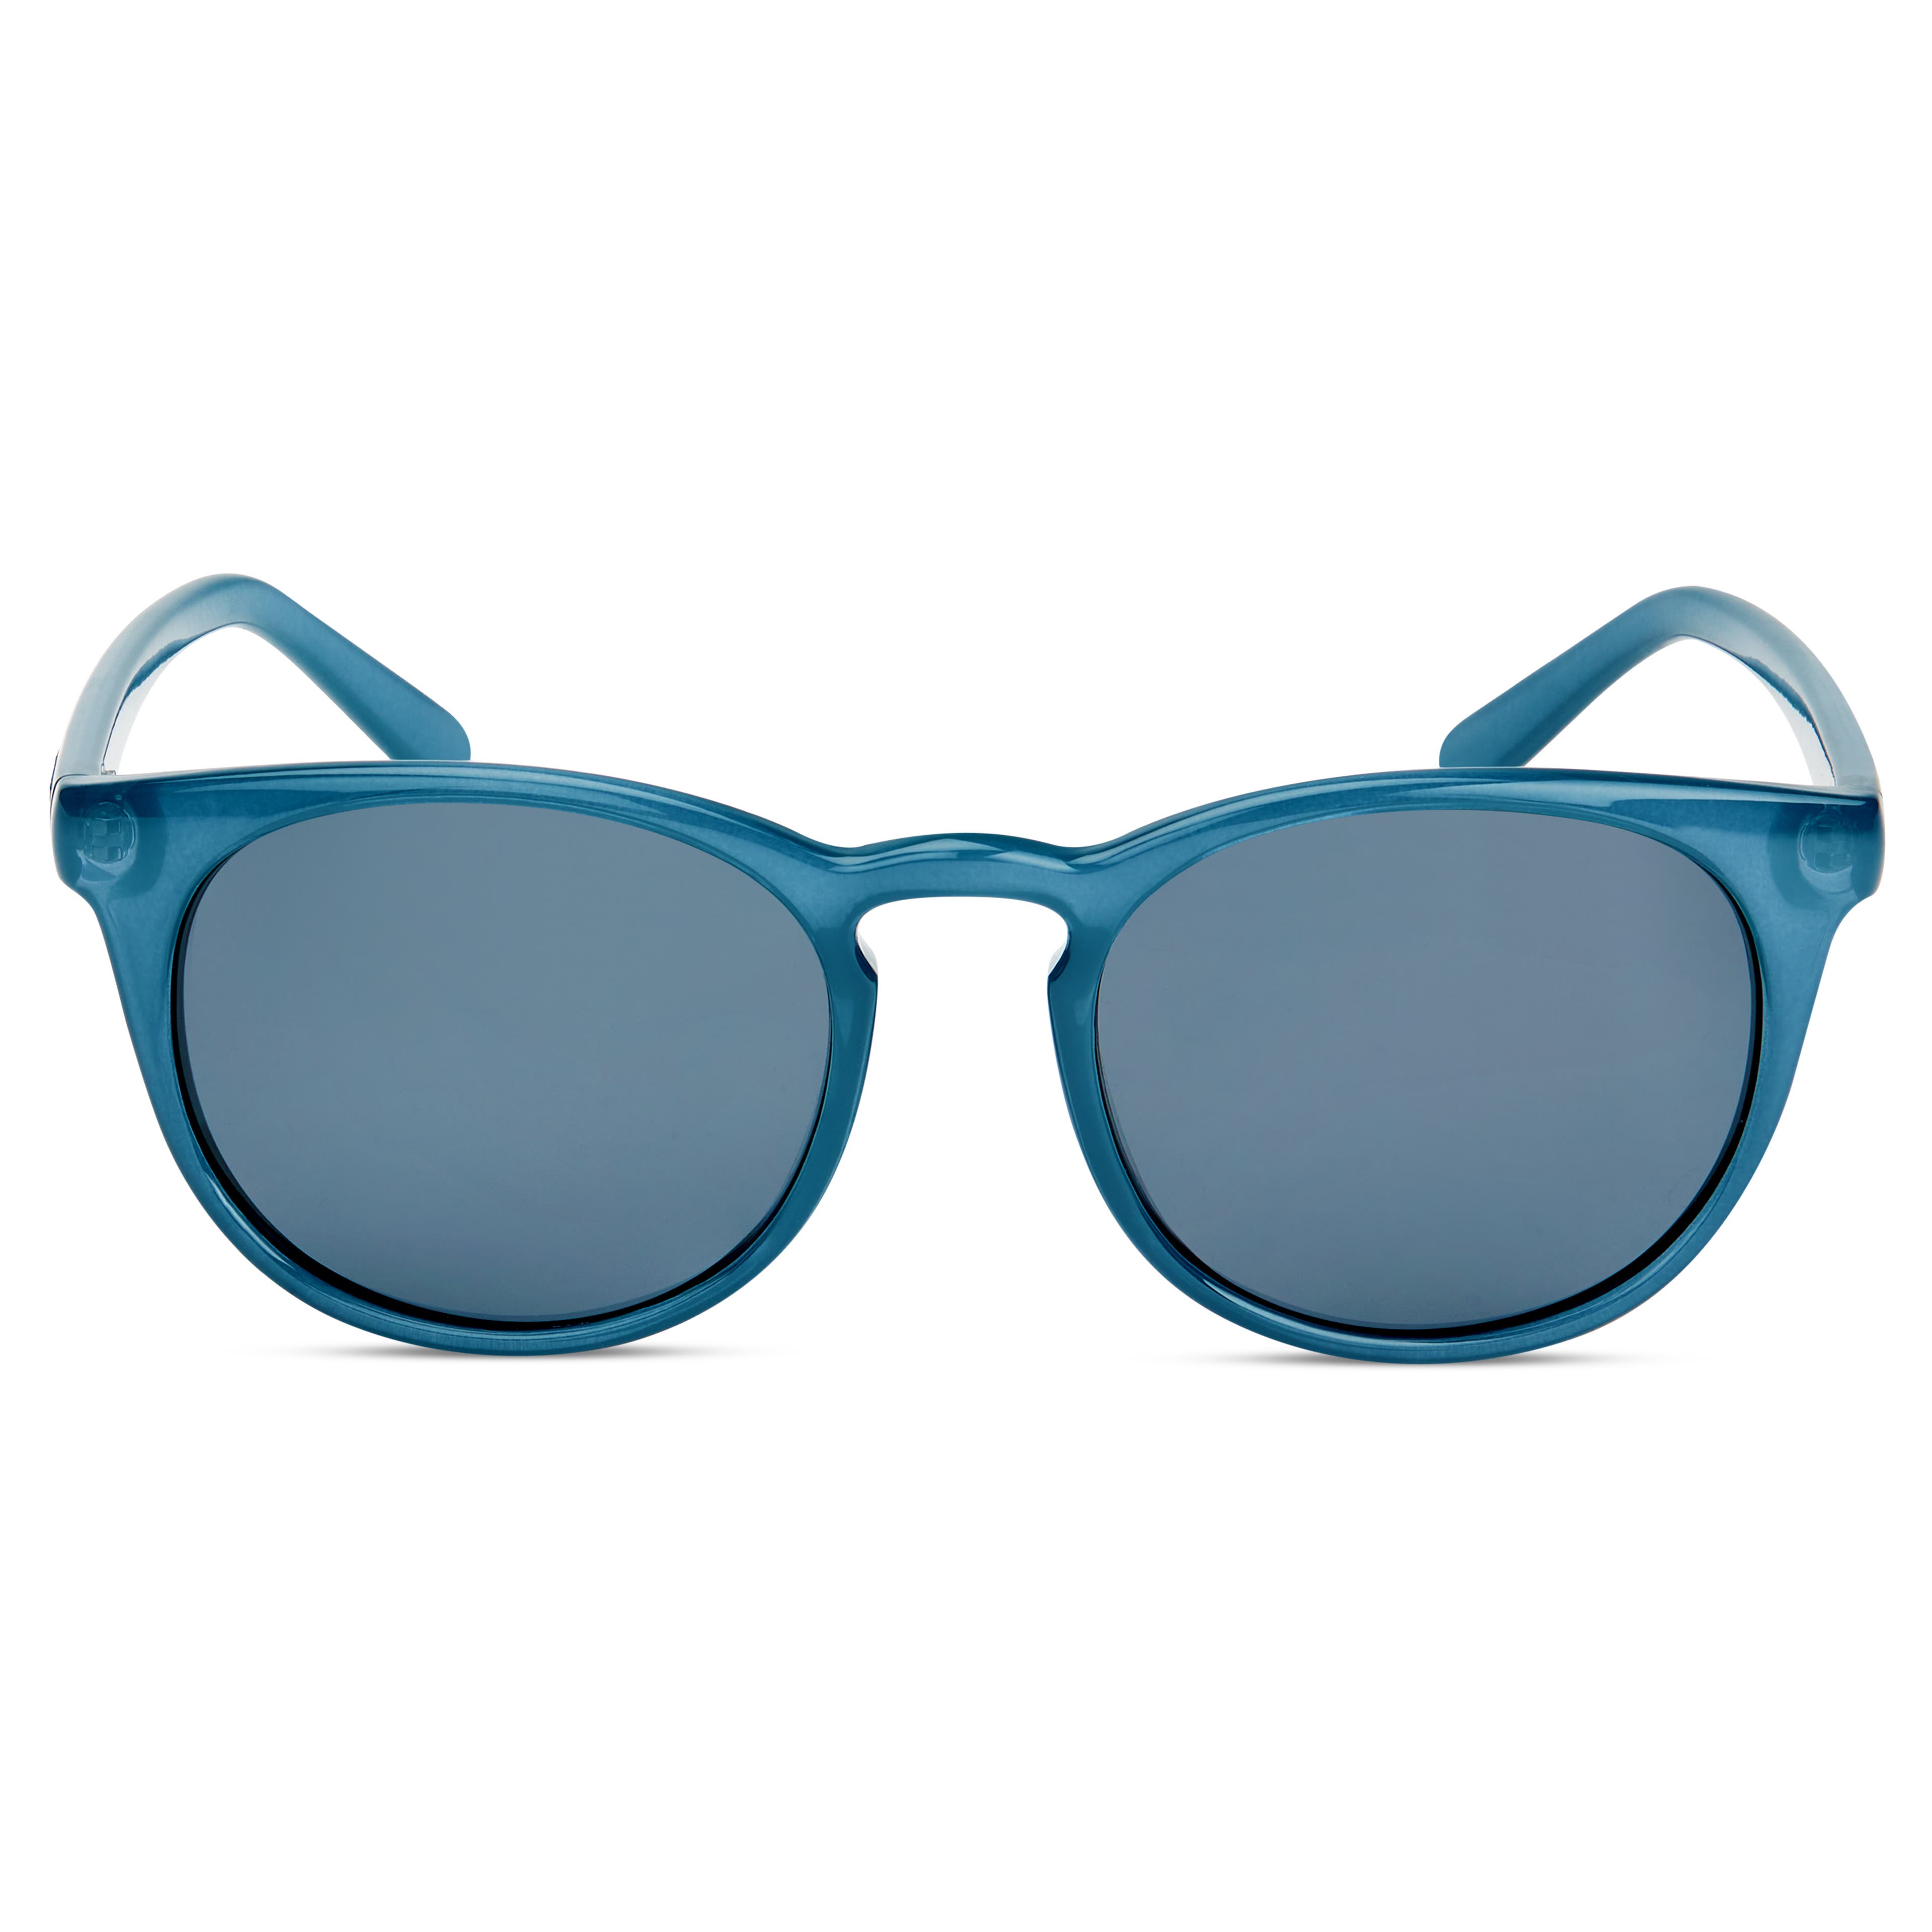 Buy Mens Blue Sunglasses Free Size Online